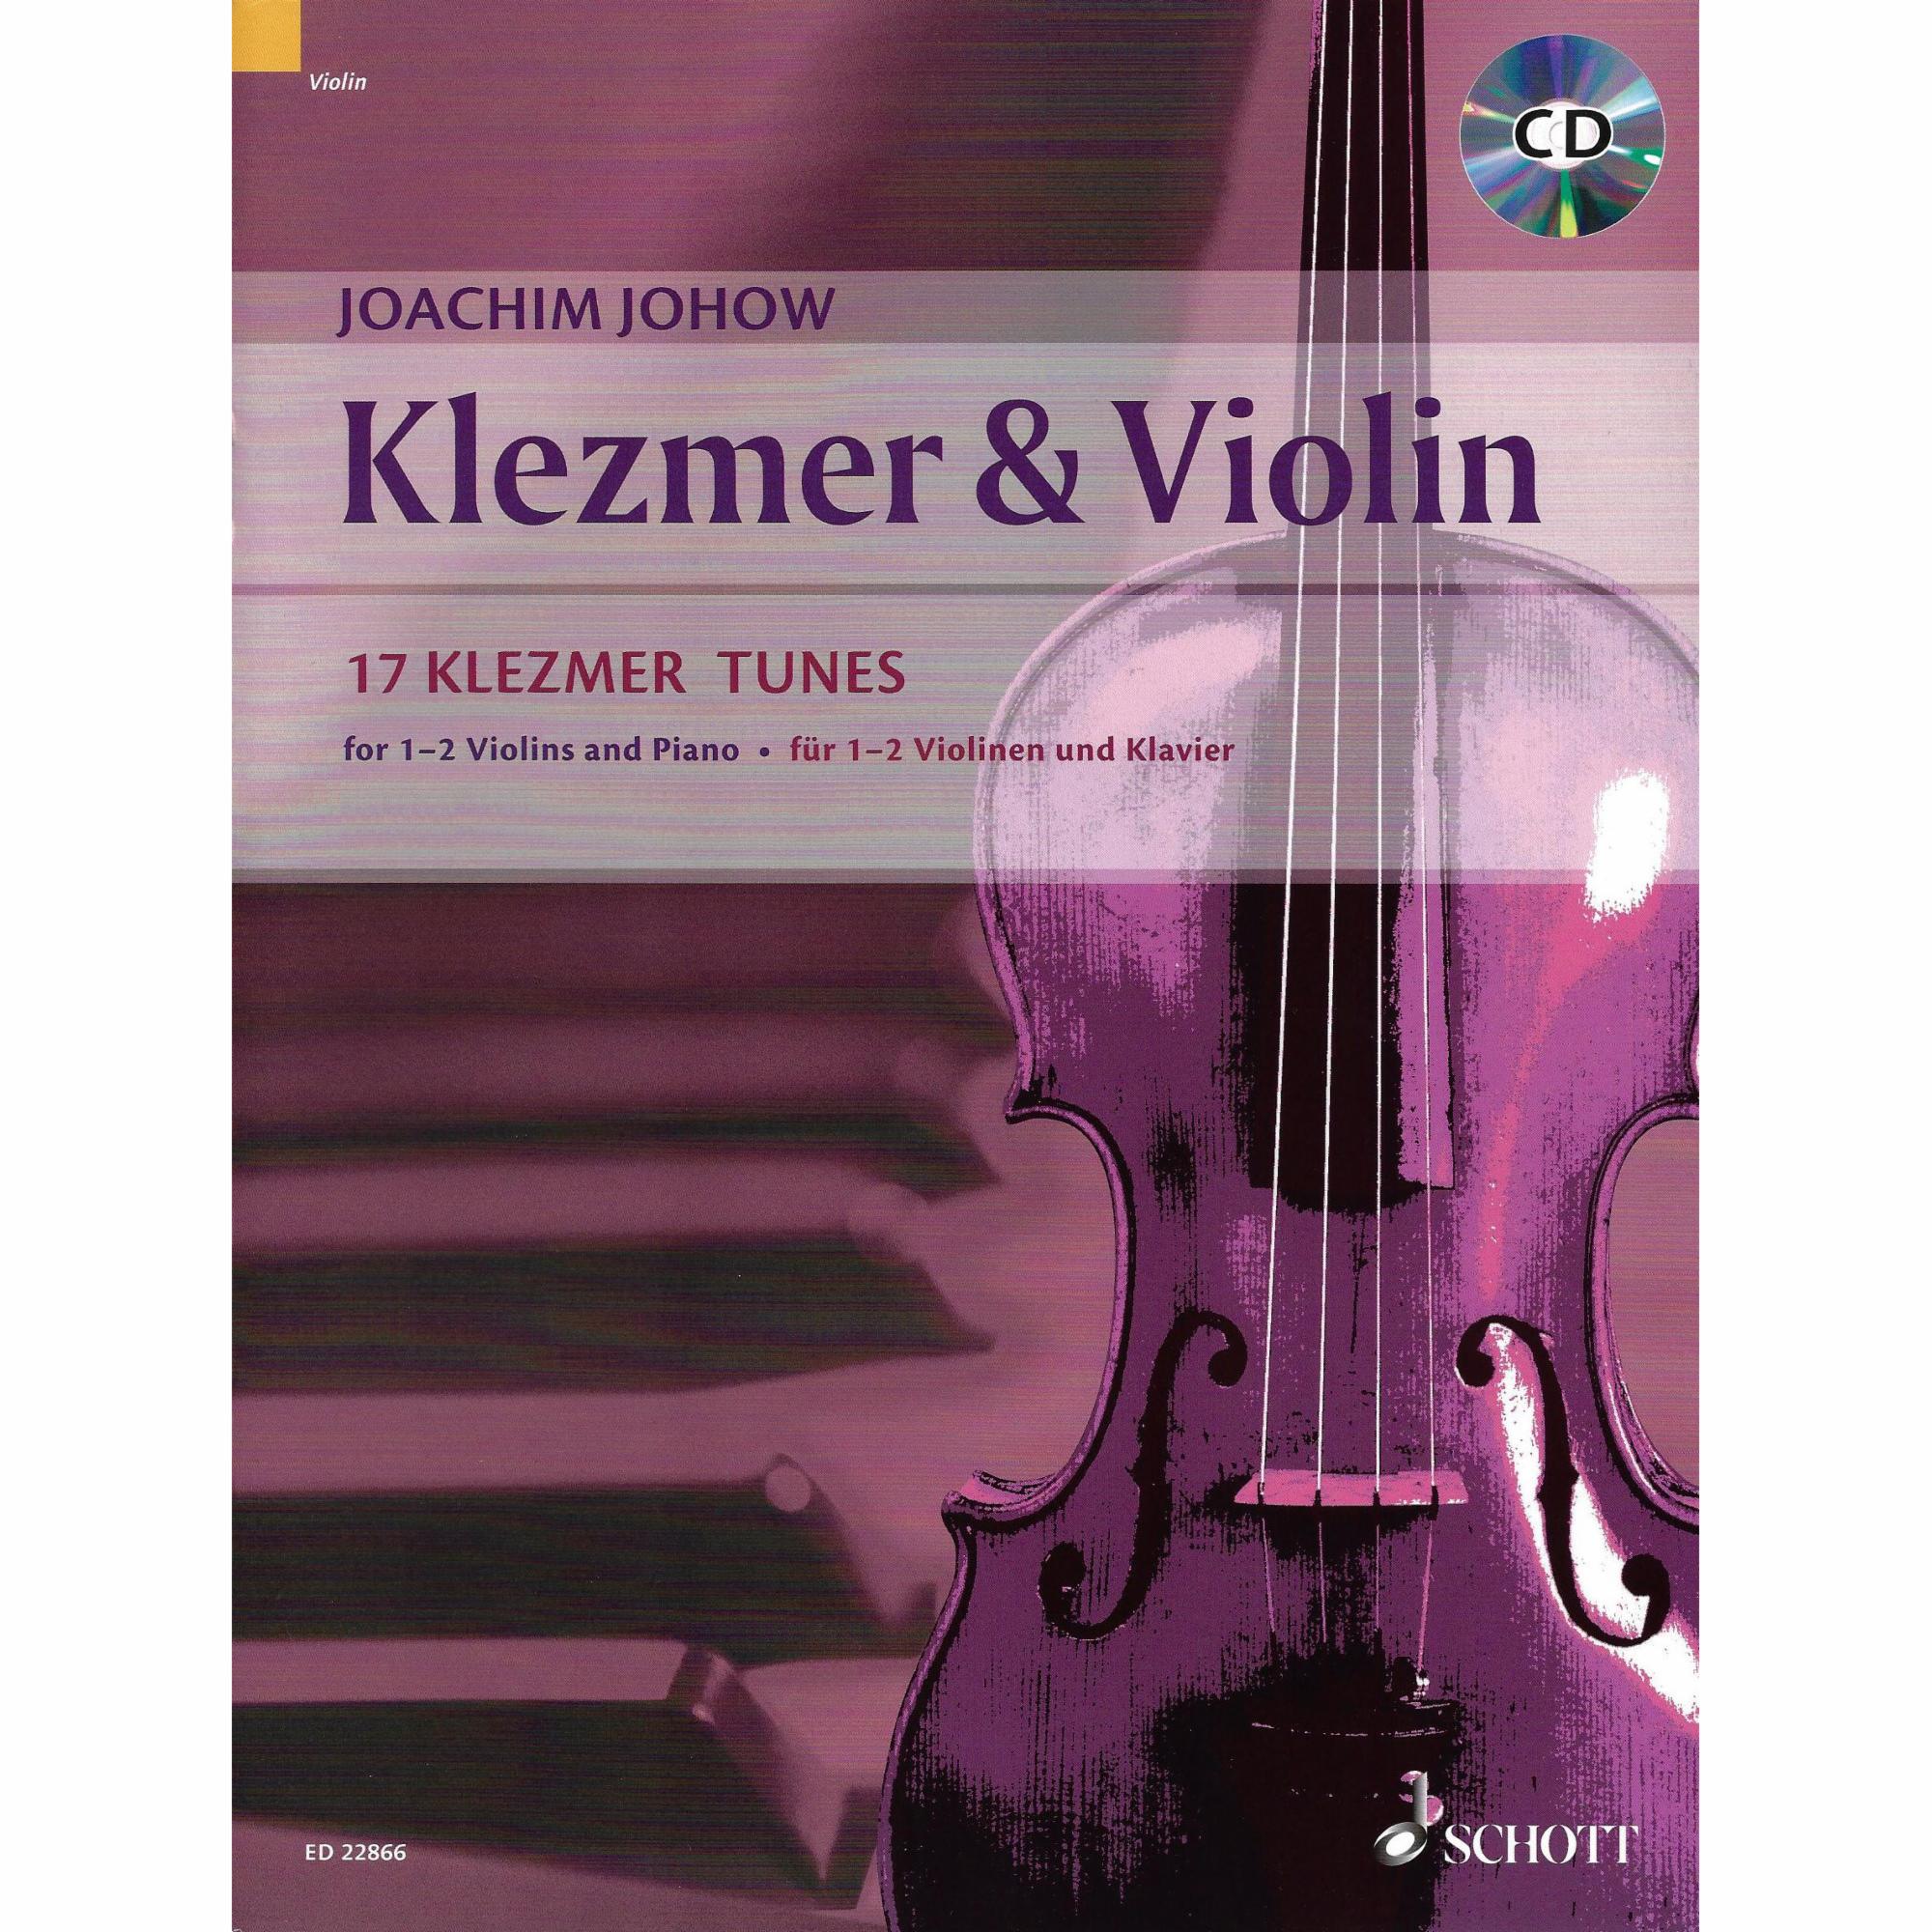 Klezmer & Violin